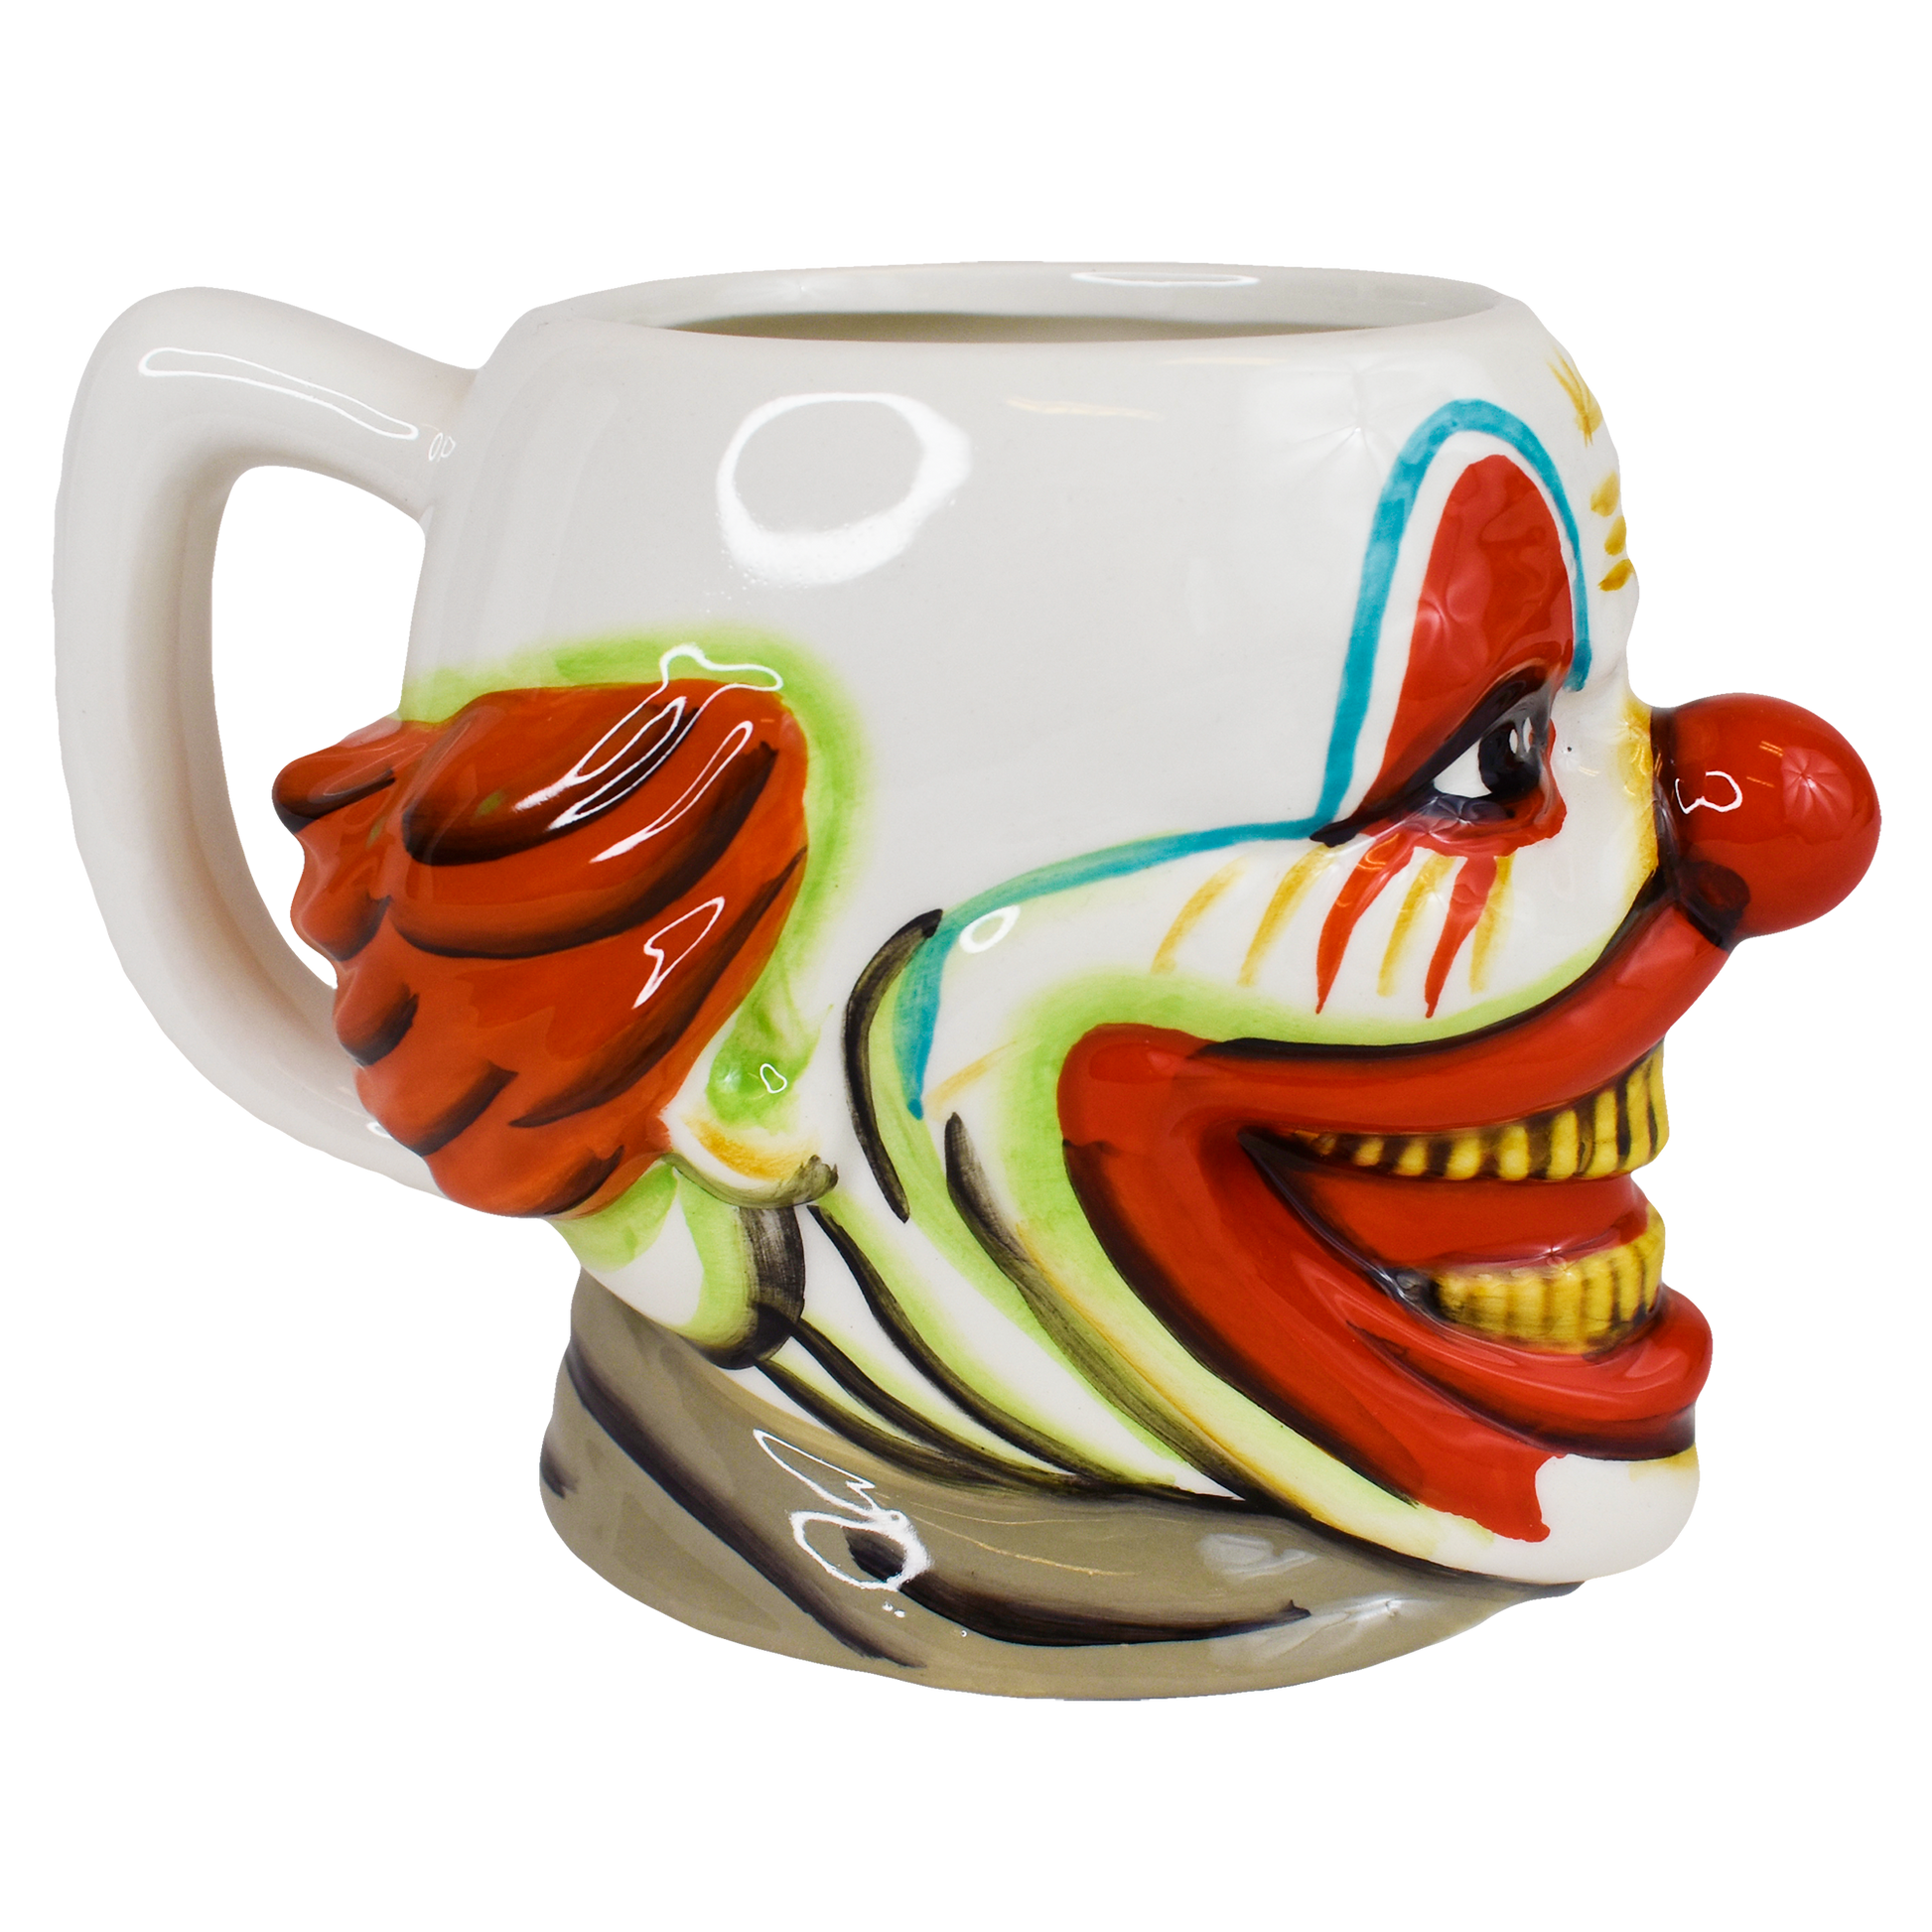 Clown Head Mug profile